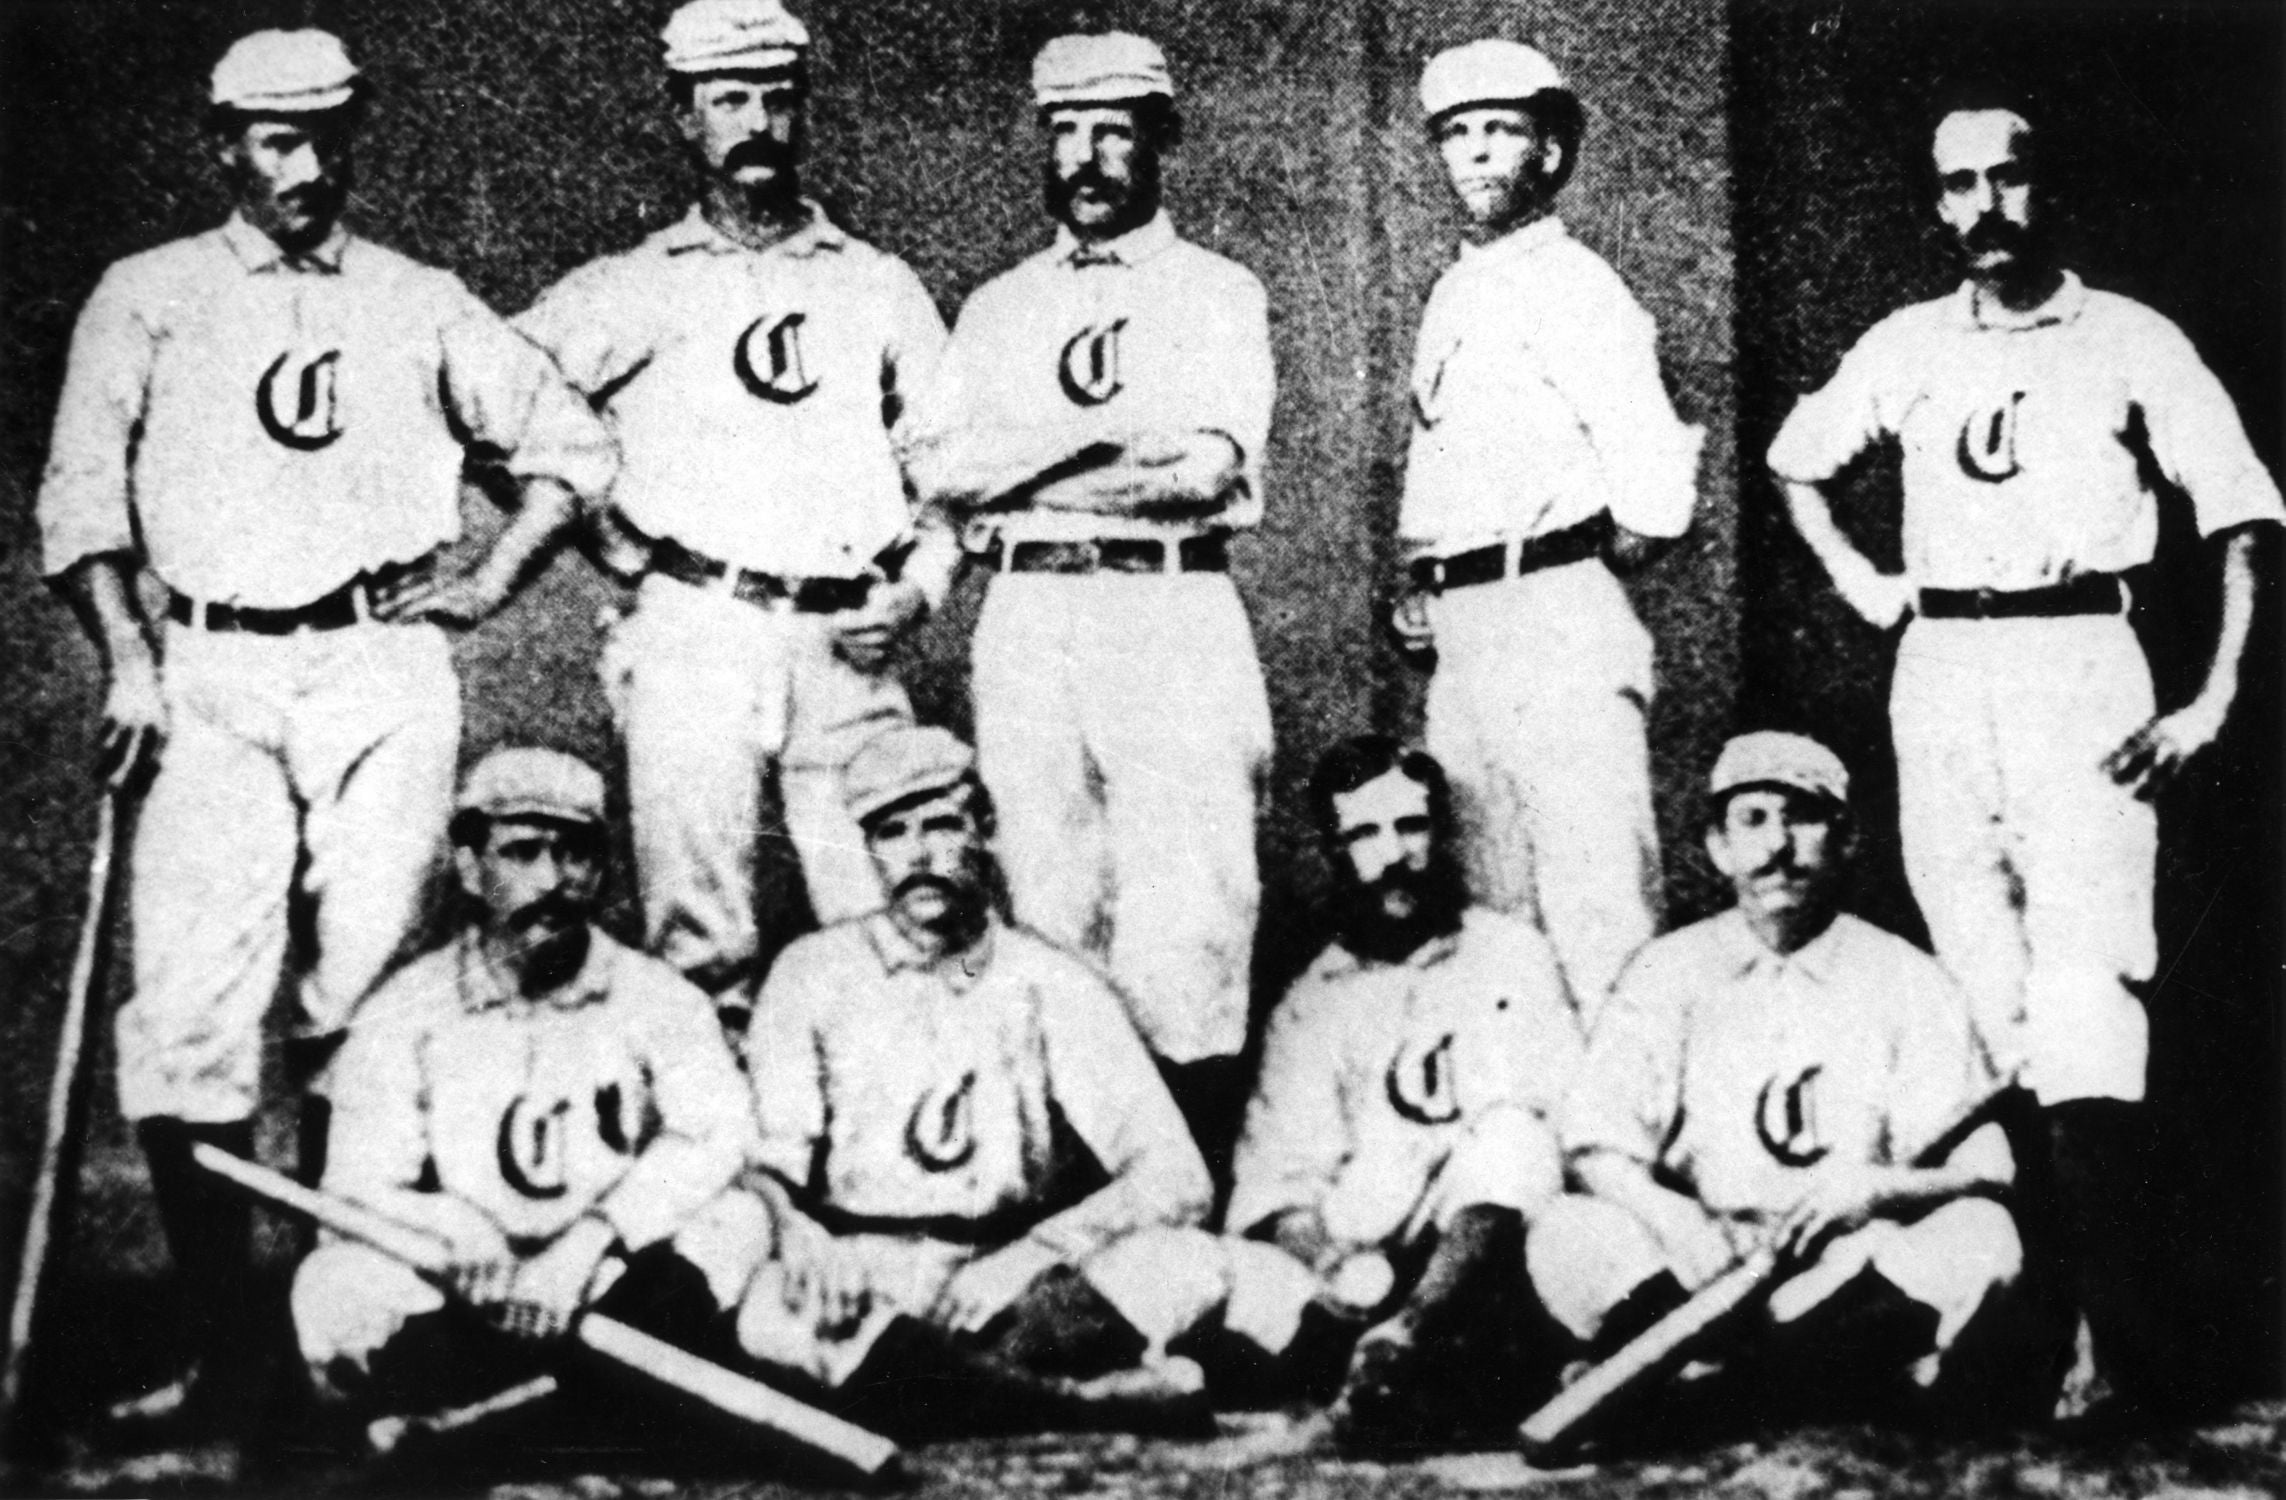 compass Expanding alias Pro baseball began in Cincinnati in 1869 | Baseball Hall of Fame